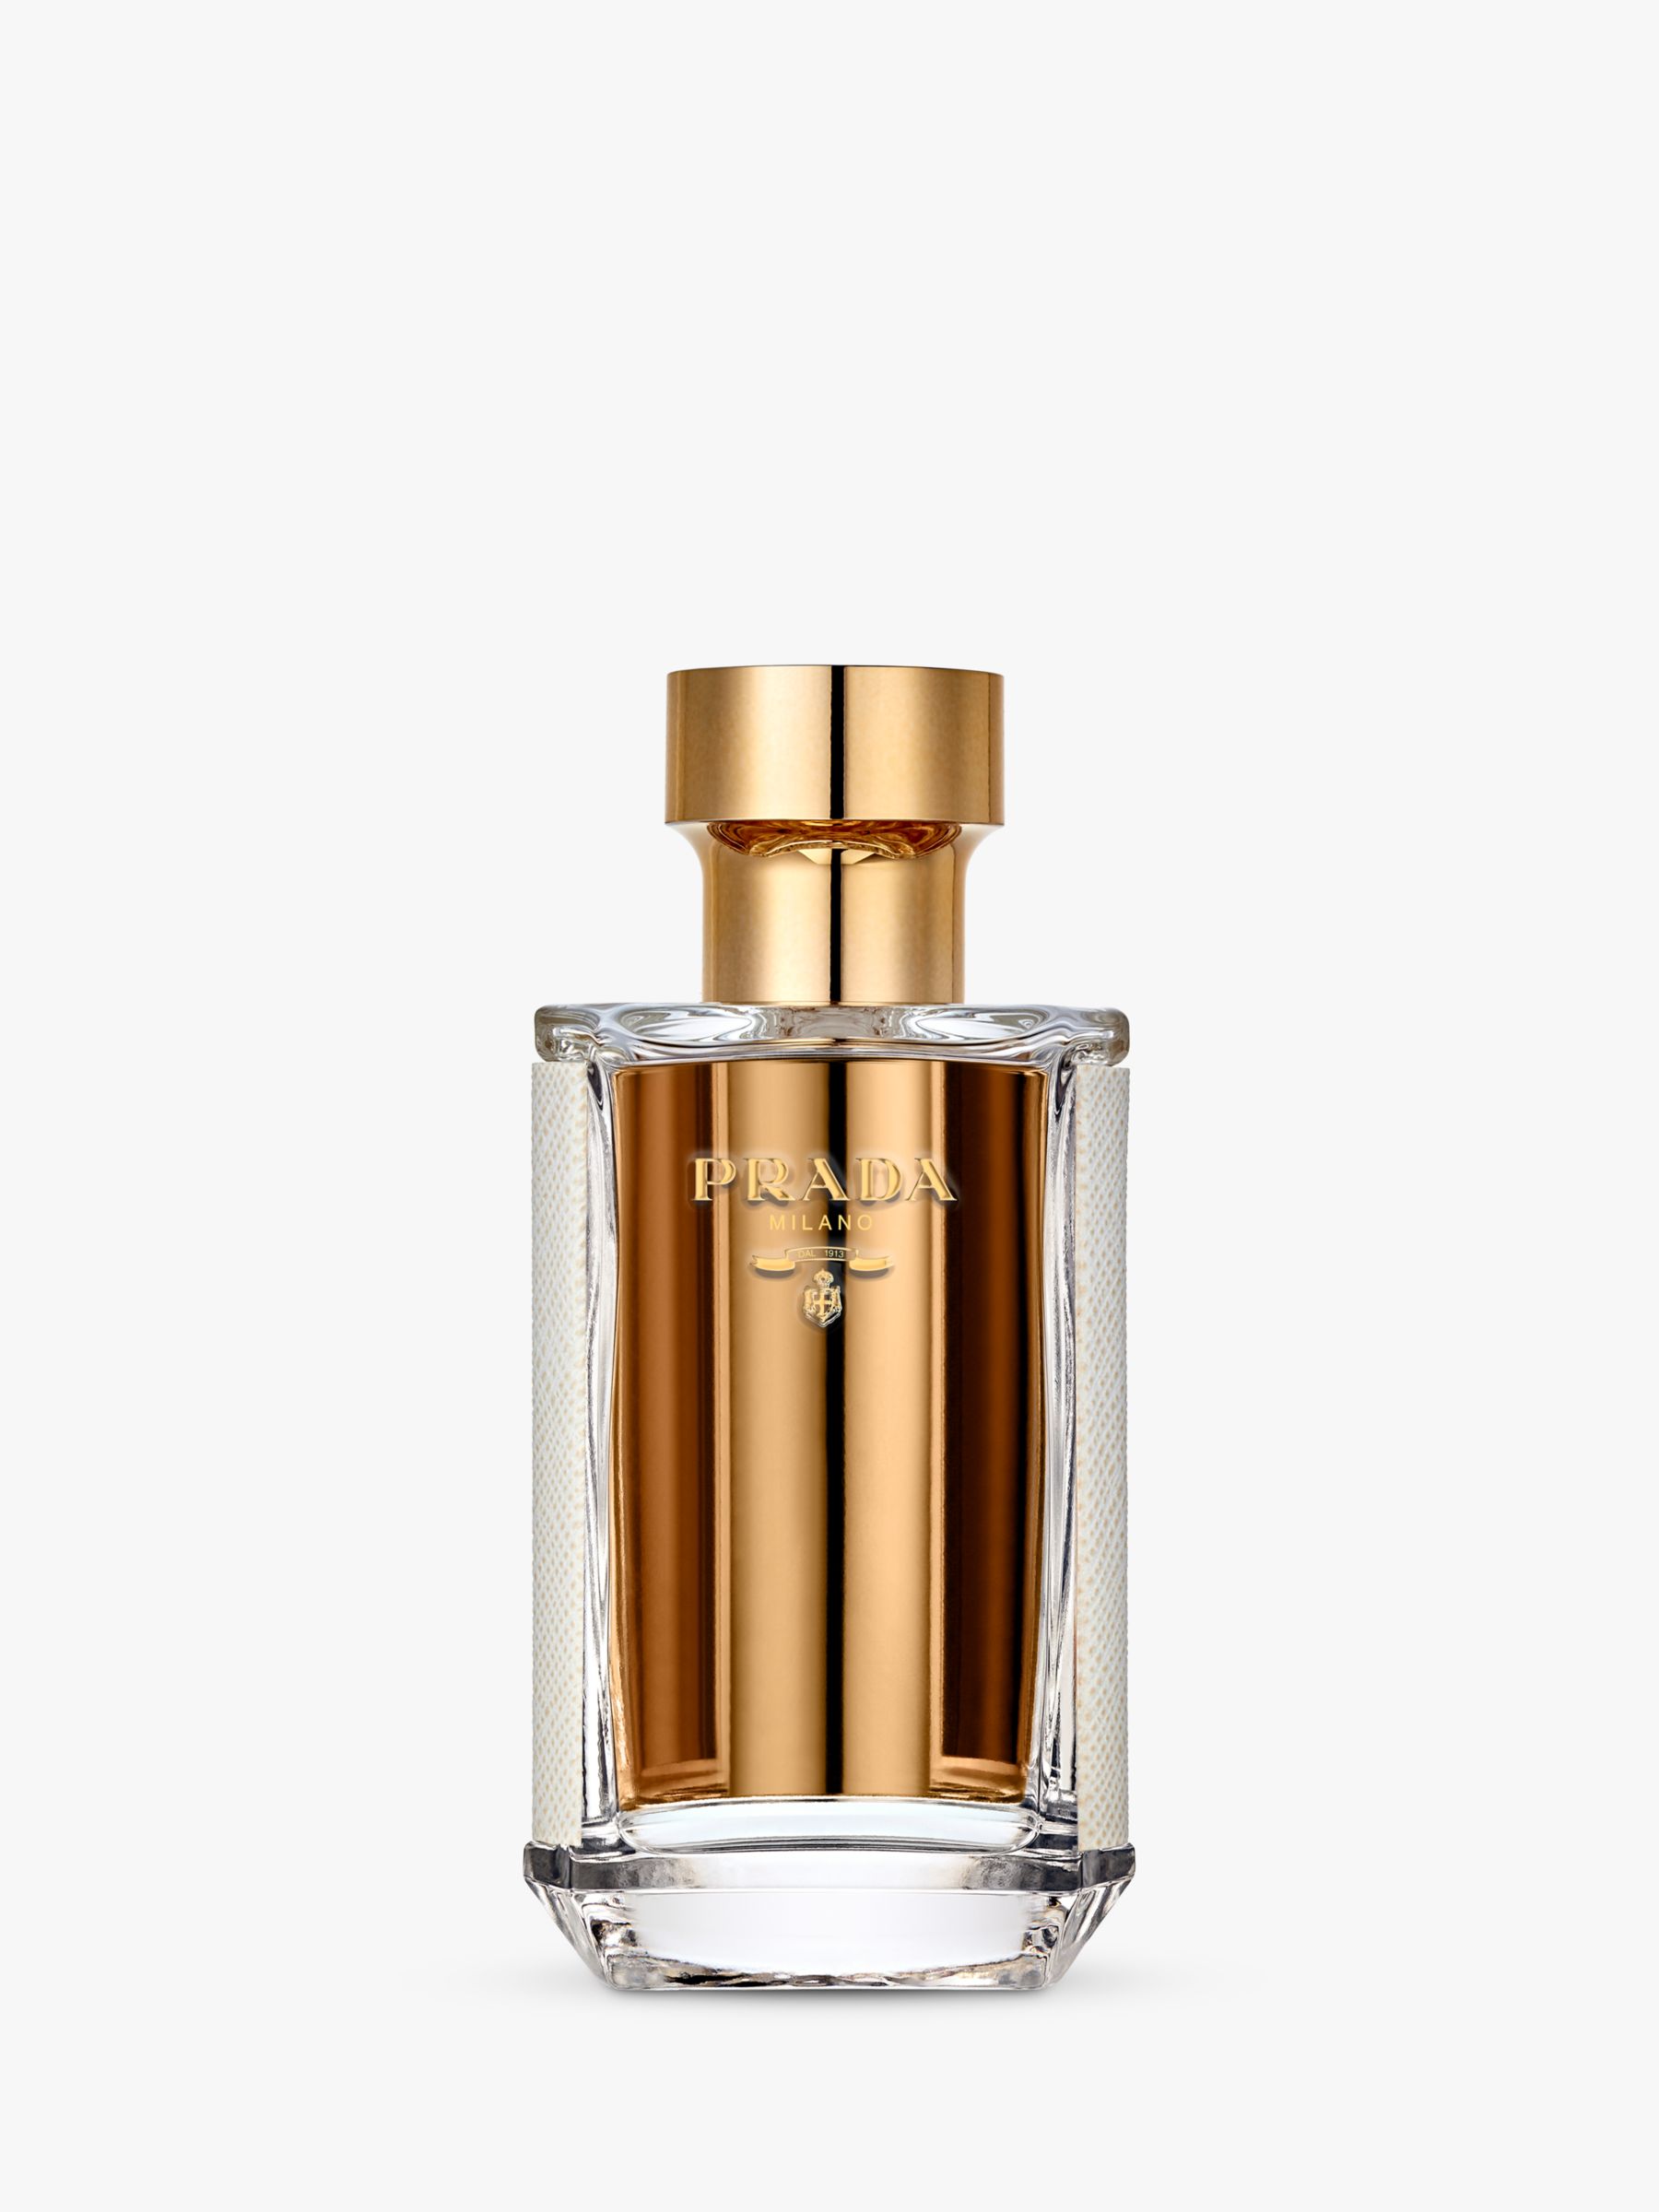 Prada La Femme Eau de Parfum, 50ml 1